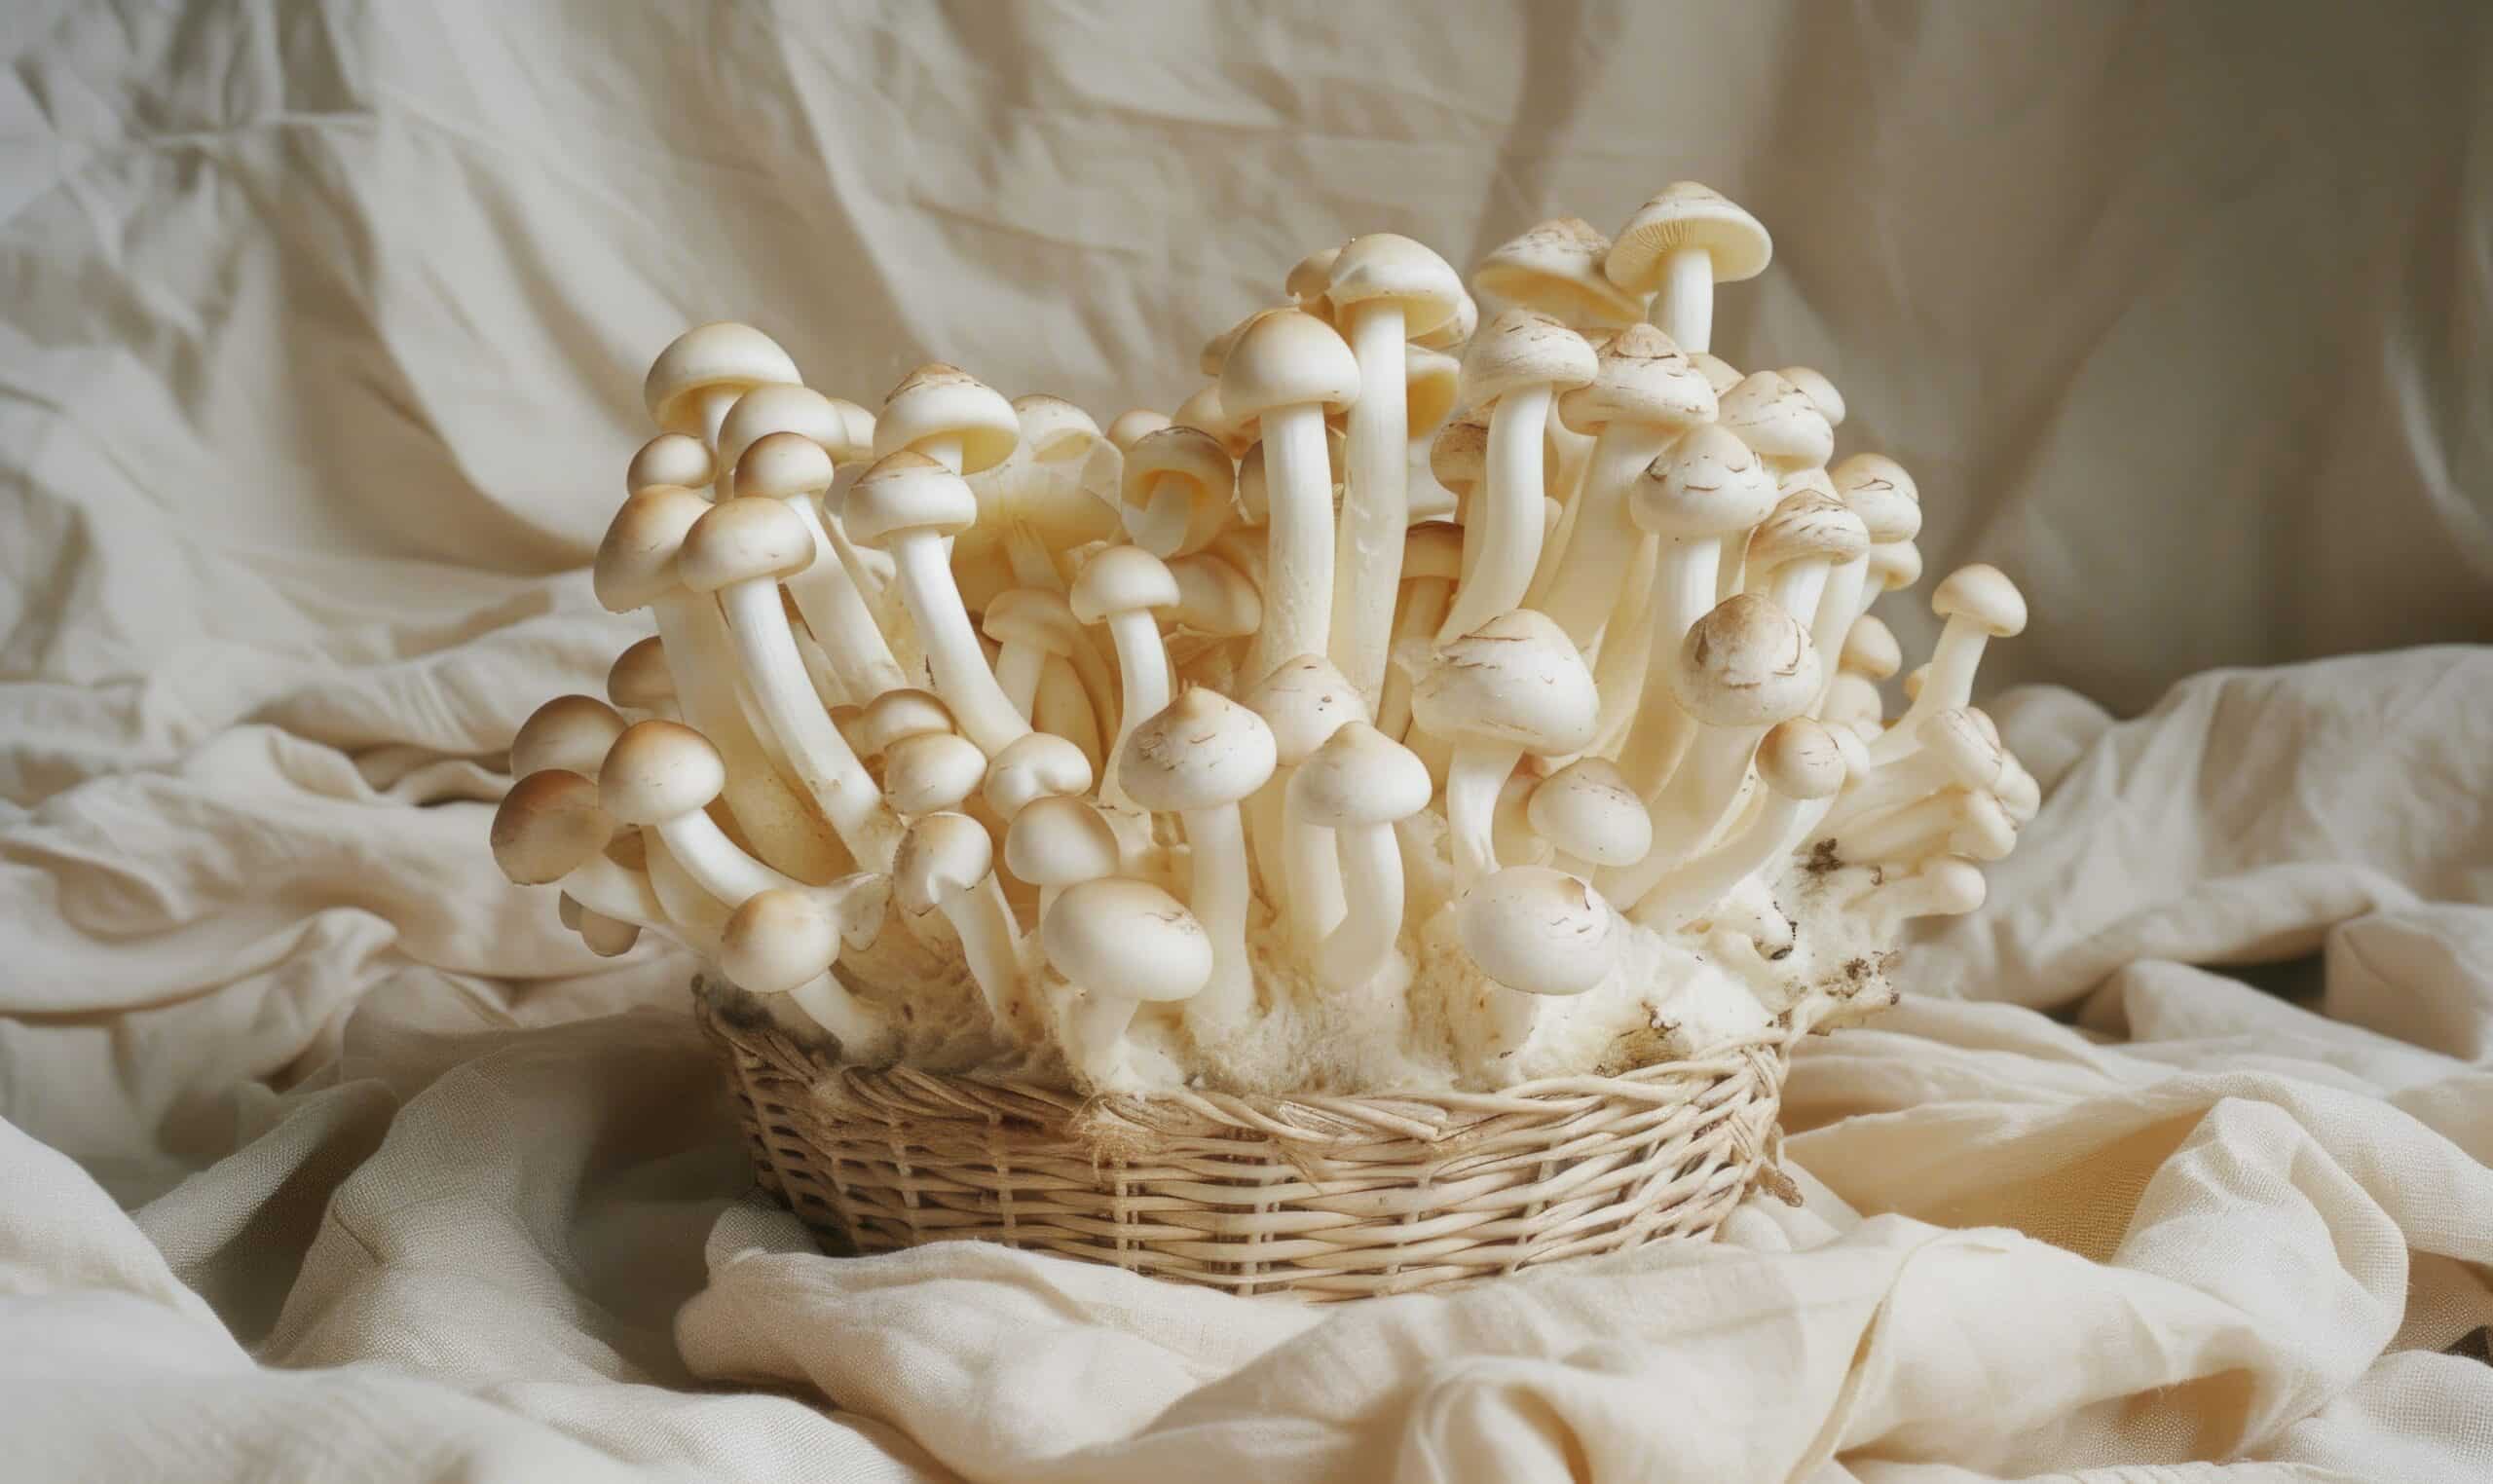 growmyownhealthfood.com : How can I start cultivating my own mushrooms?